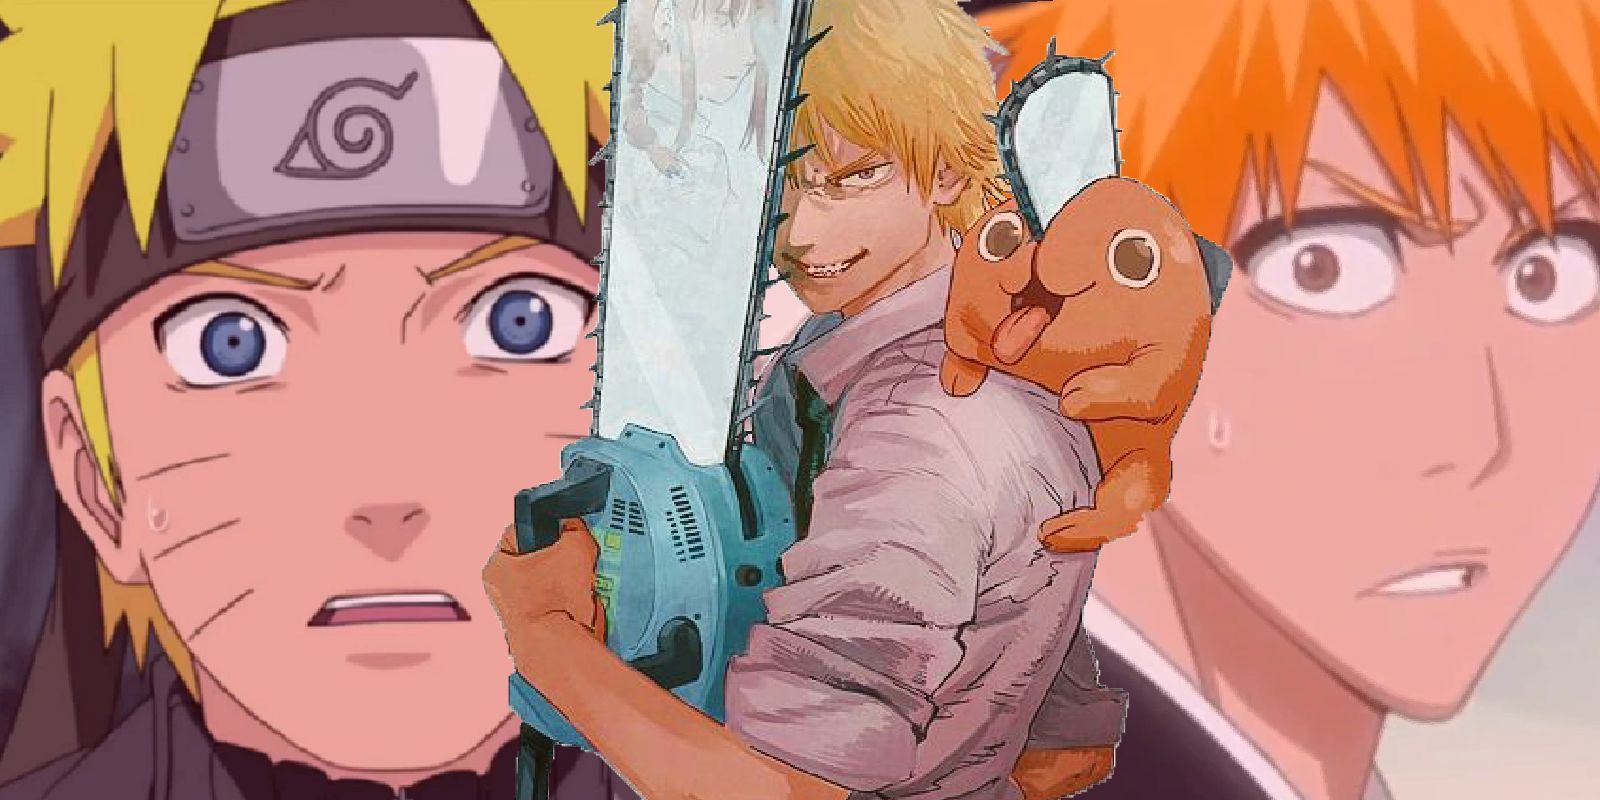 Denji from Chainsaw man, Ichigo from bleach and Naruto